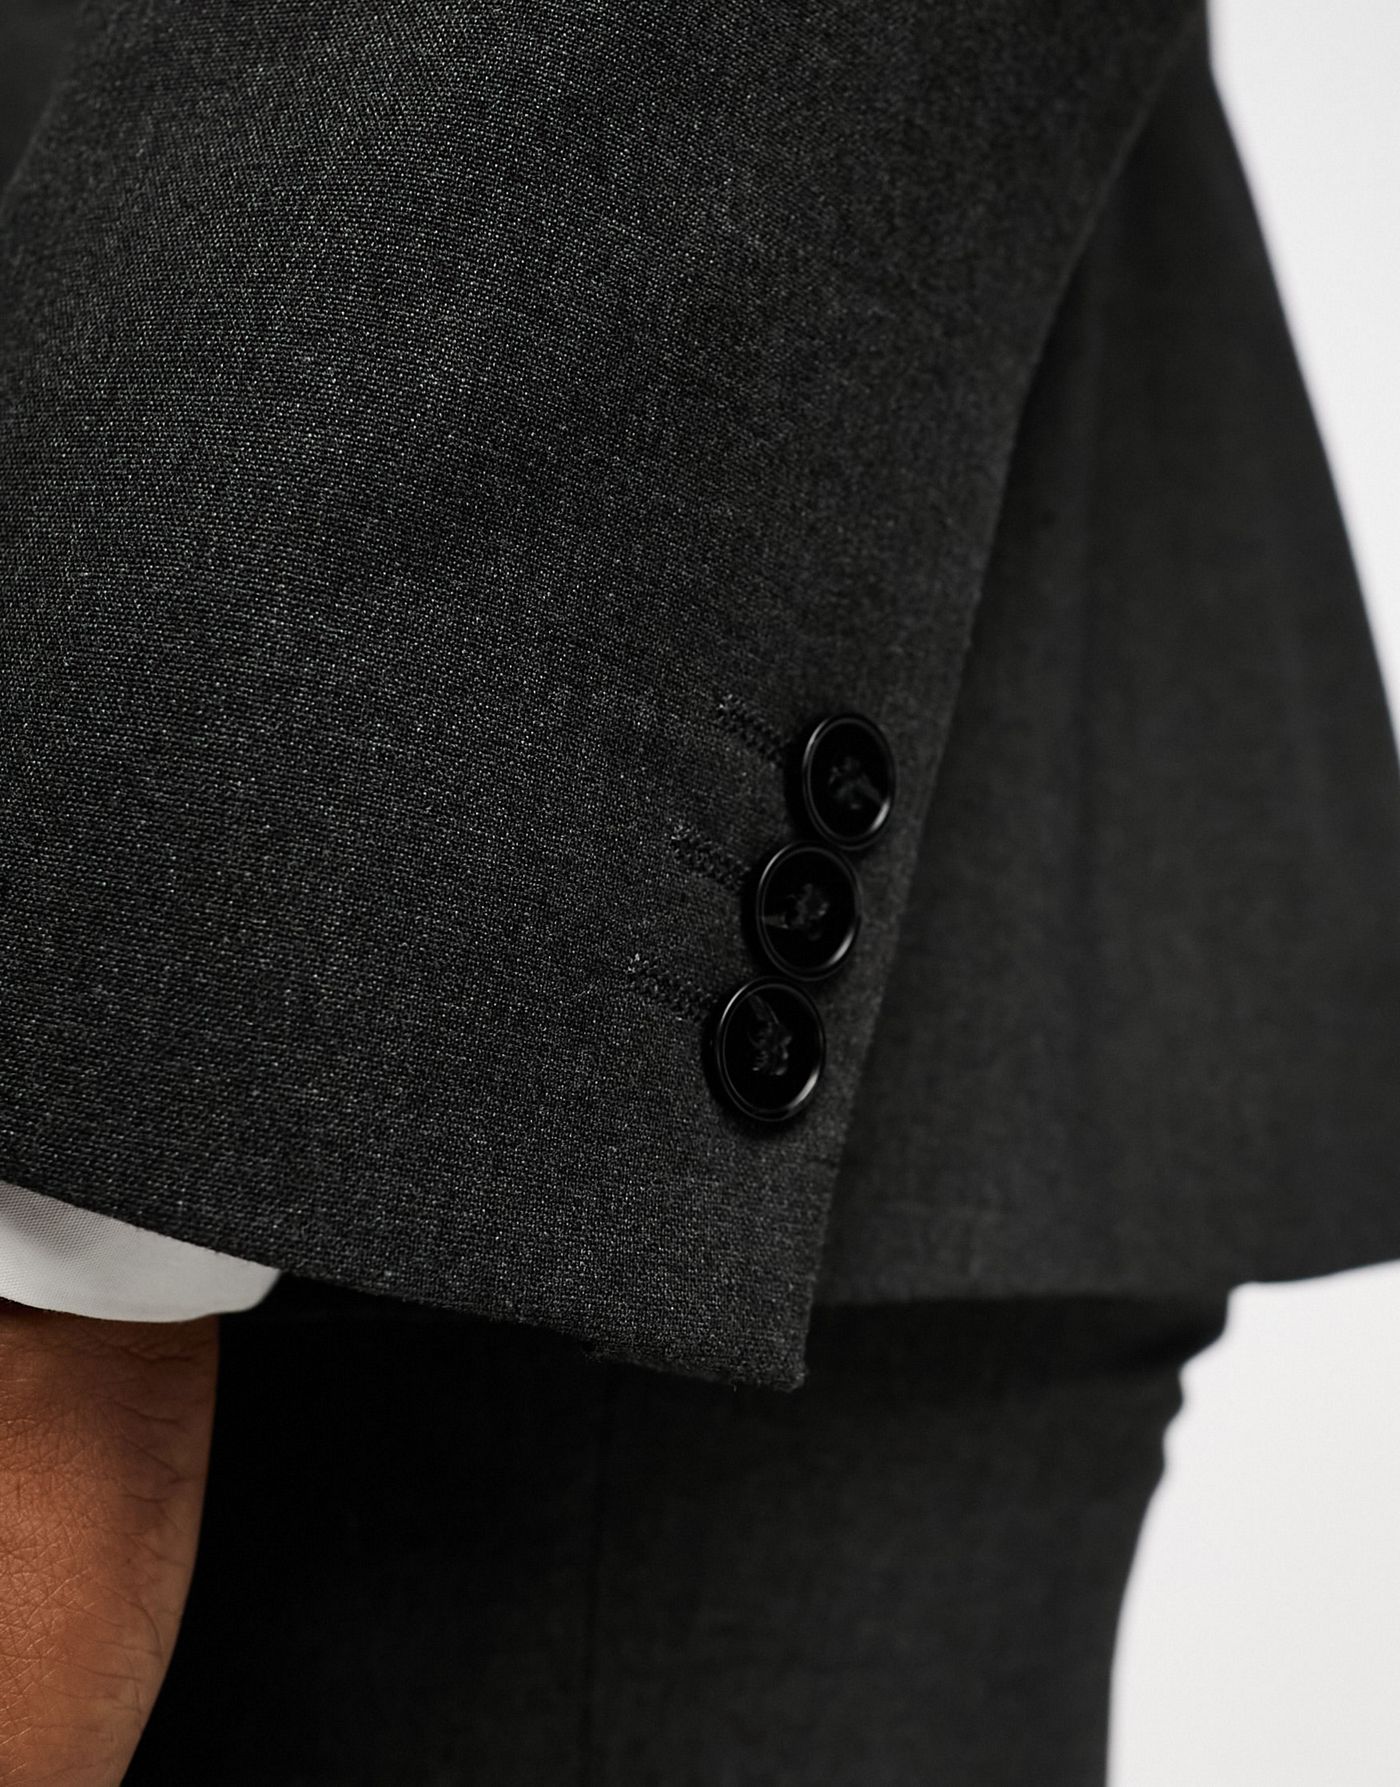 ASOS DESIGN slim suit jacket in charcoal